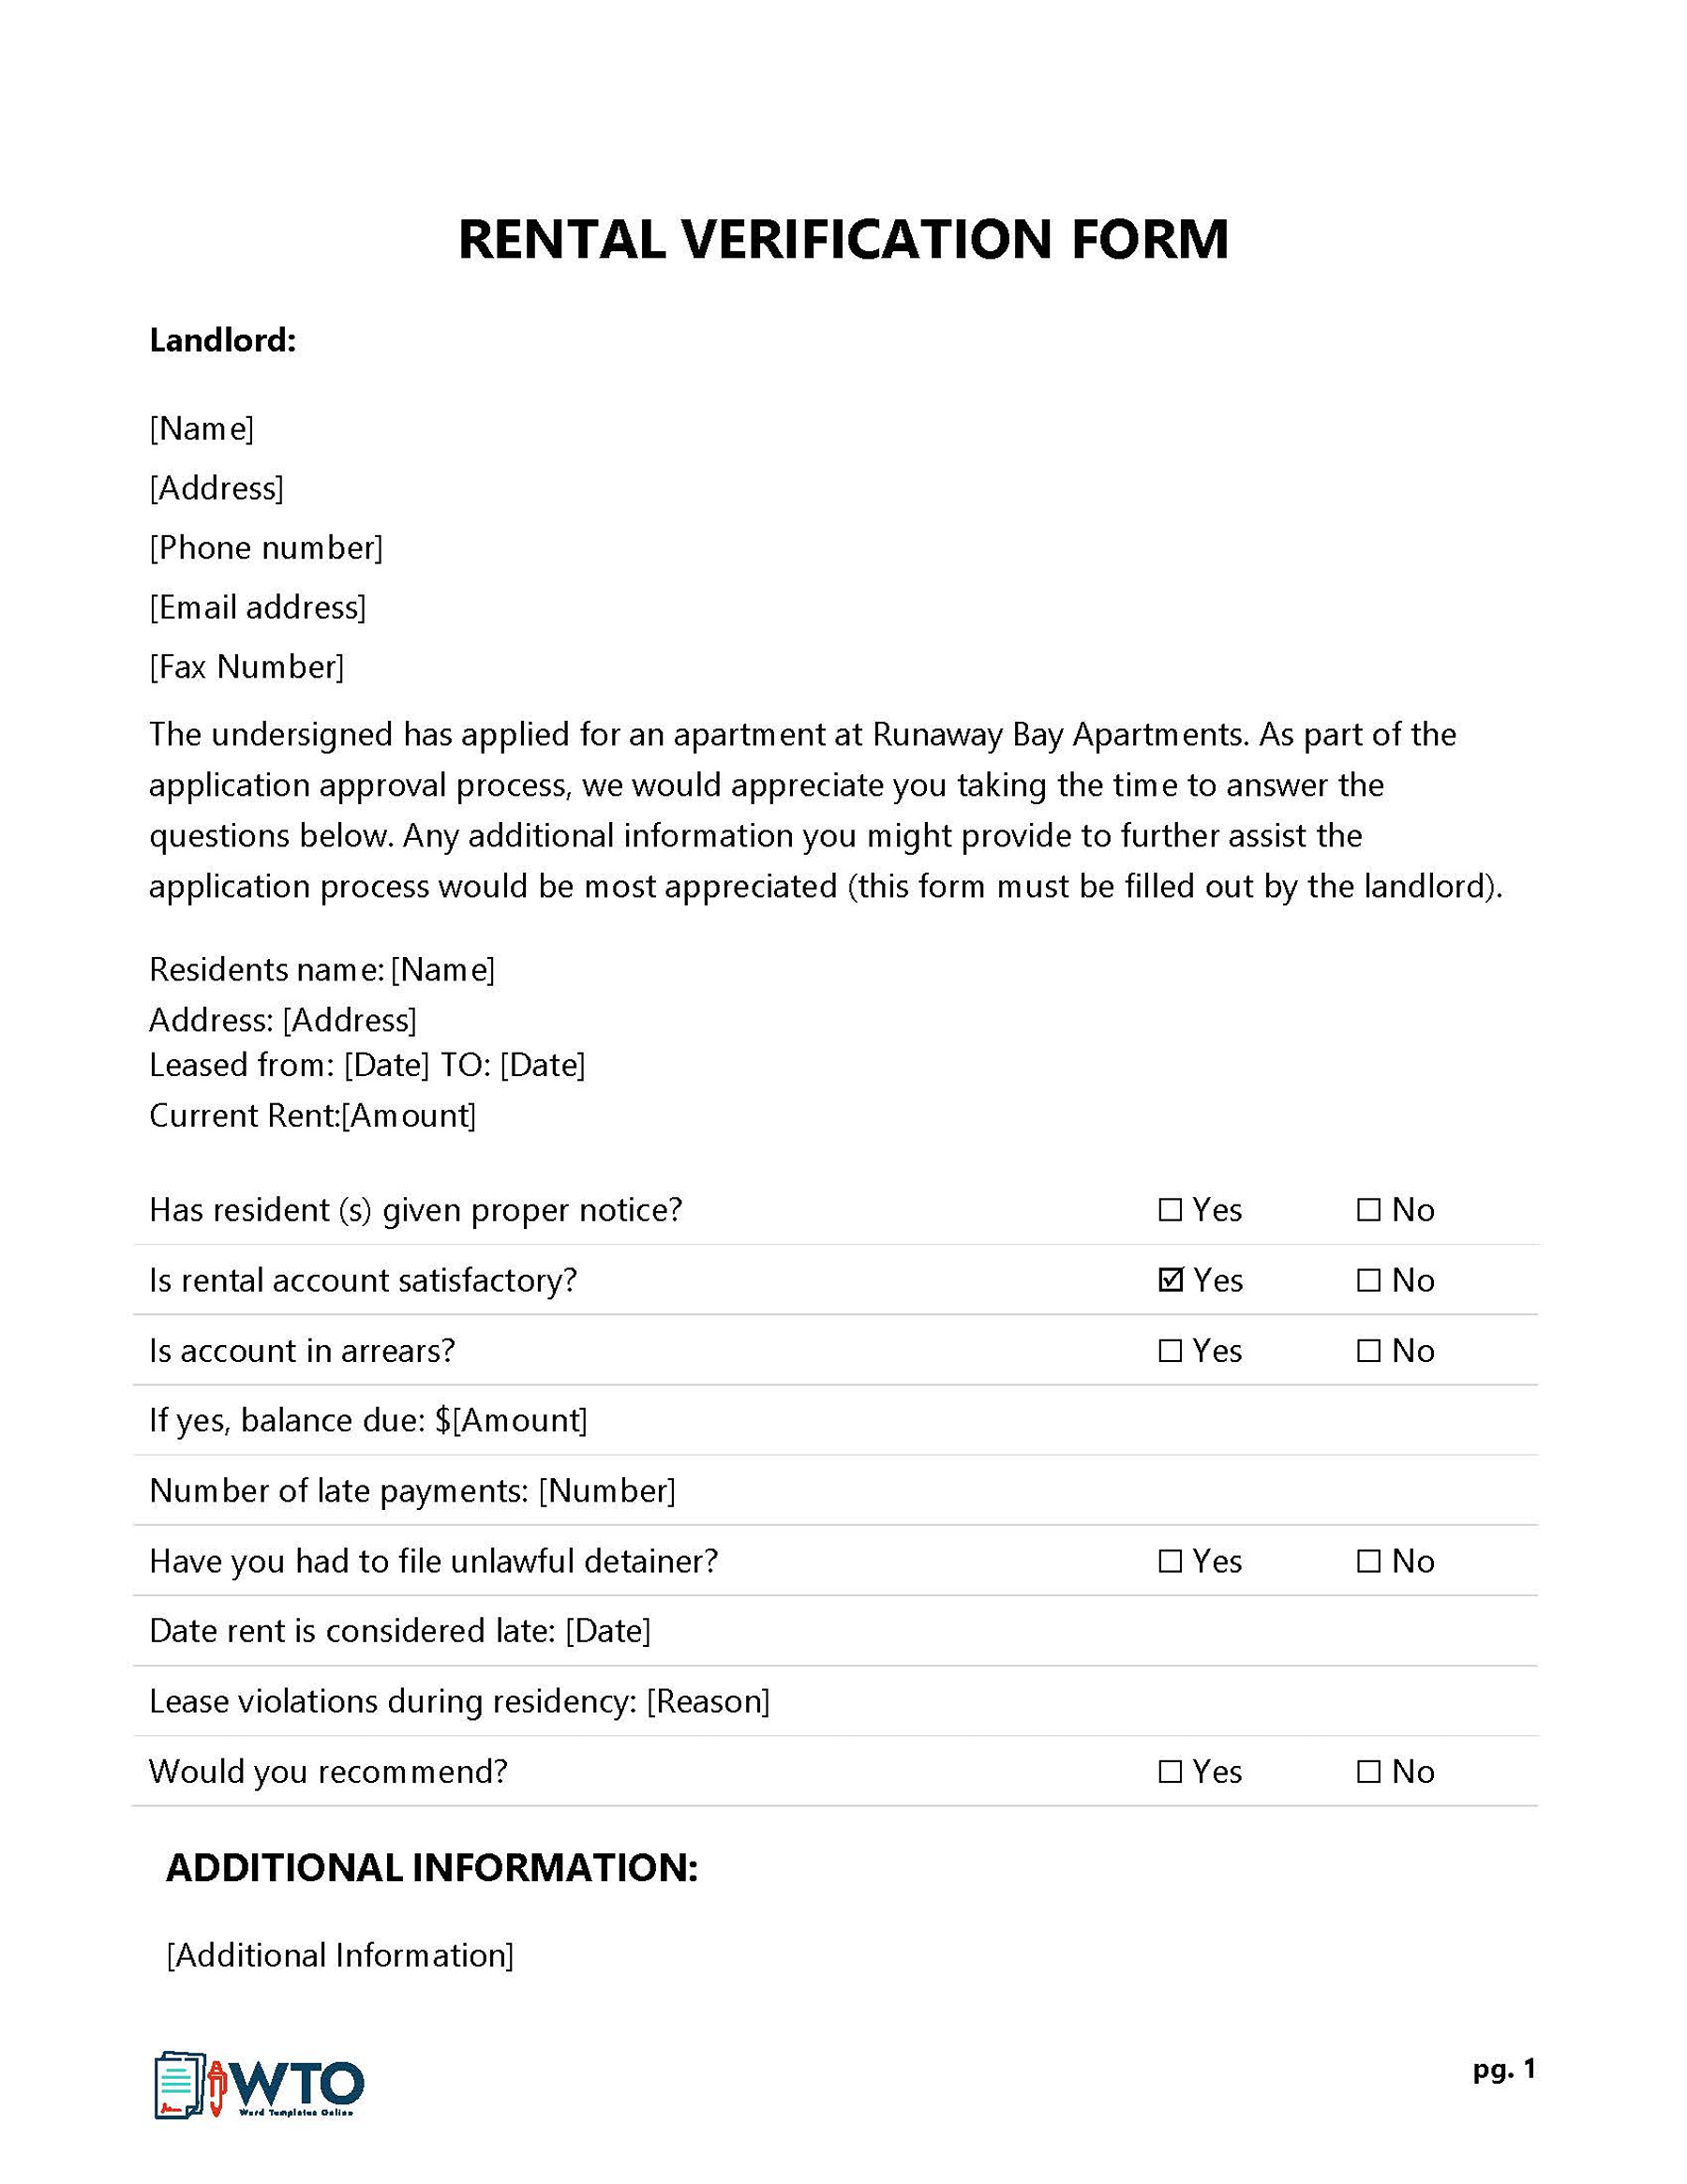 Rental Verification Form - Comprehensive Example